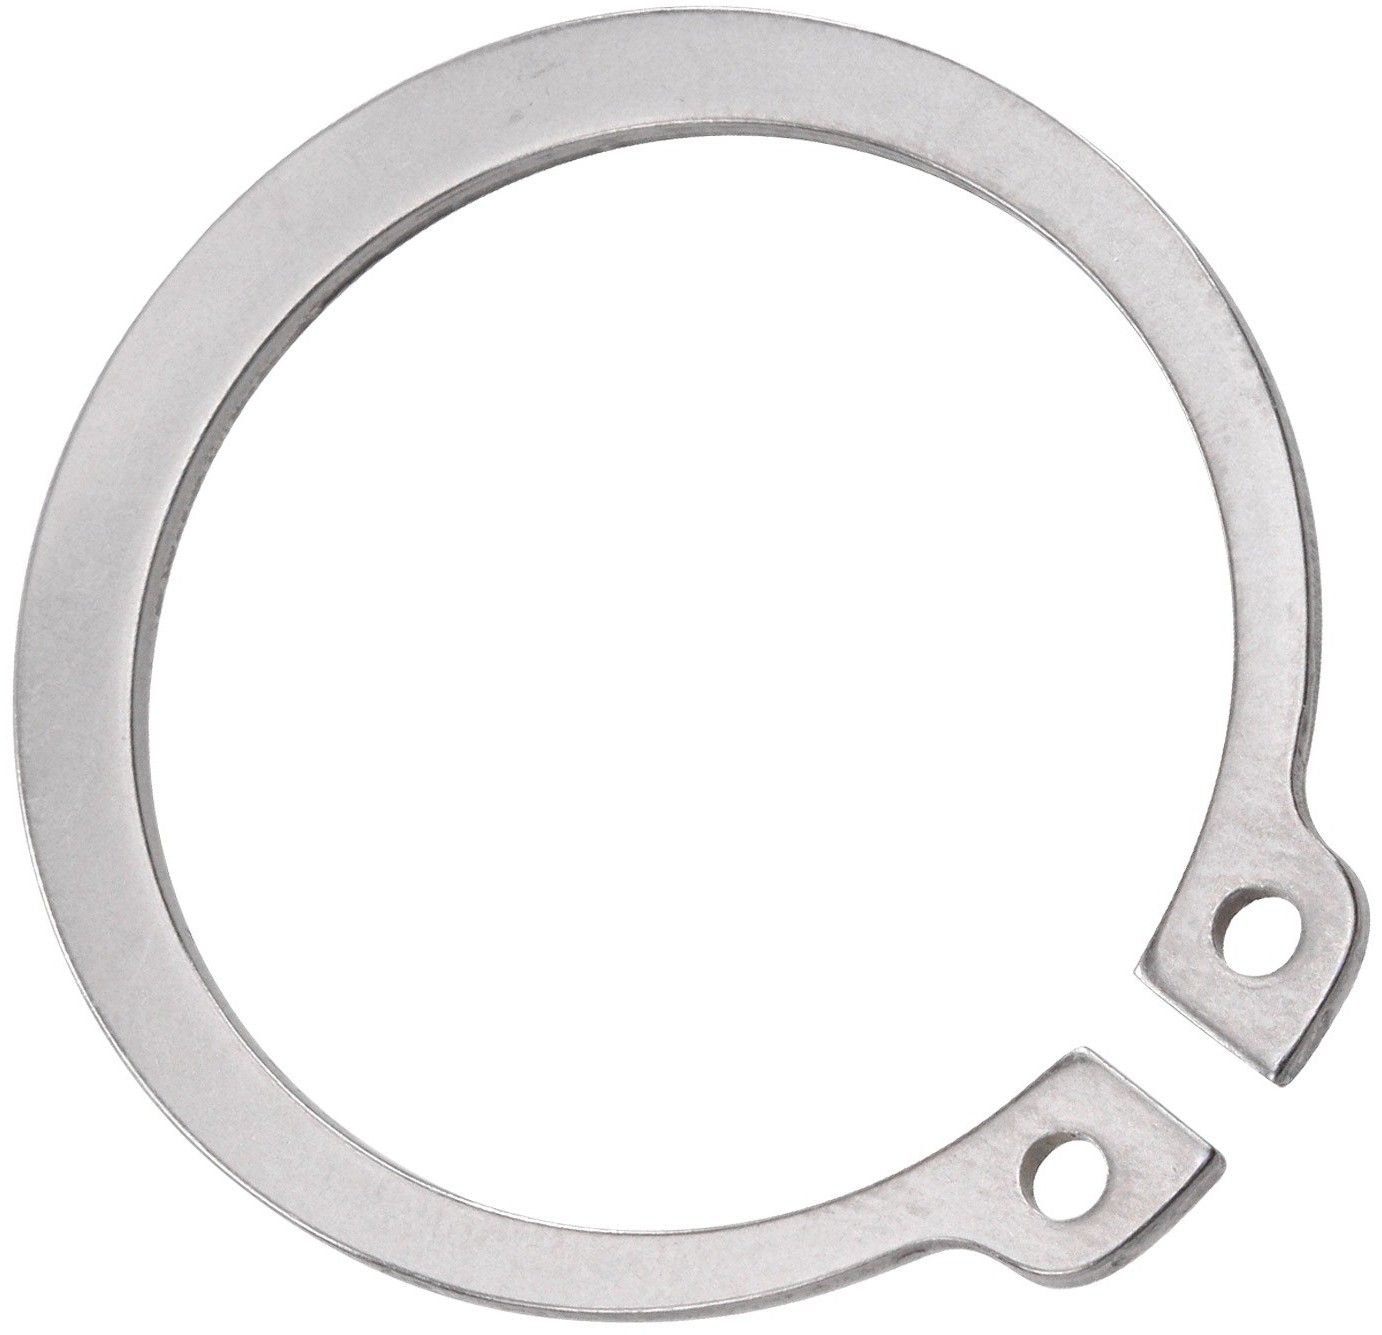 Кольцо стопорное наружное 300х5 DIN 471, нержавеющая сталь 1.4122 (А2) - фото